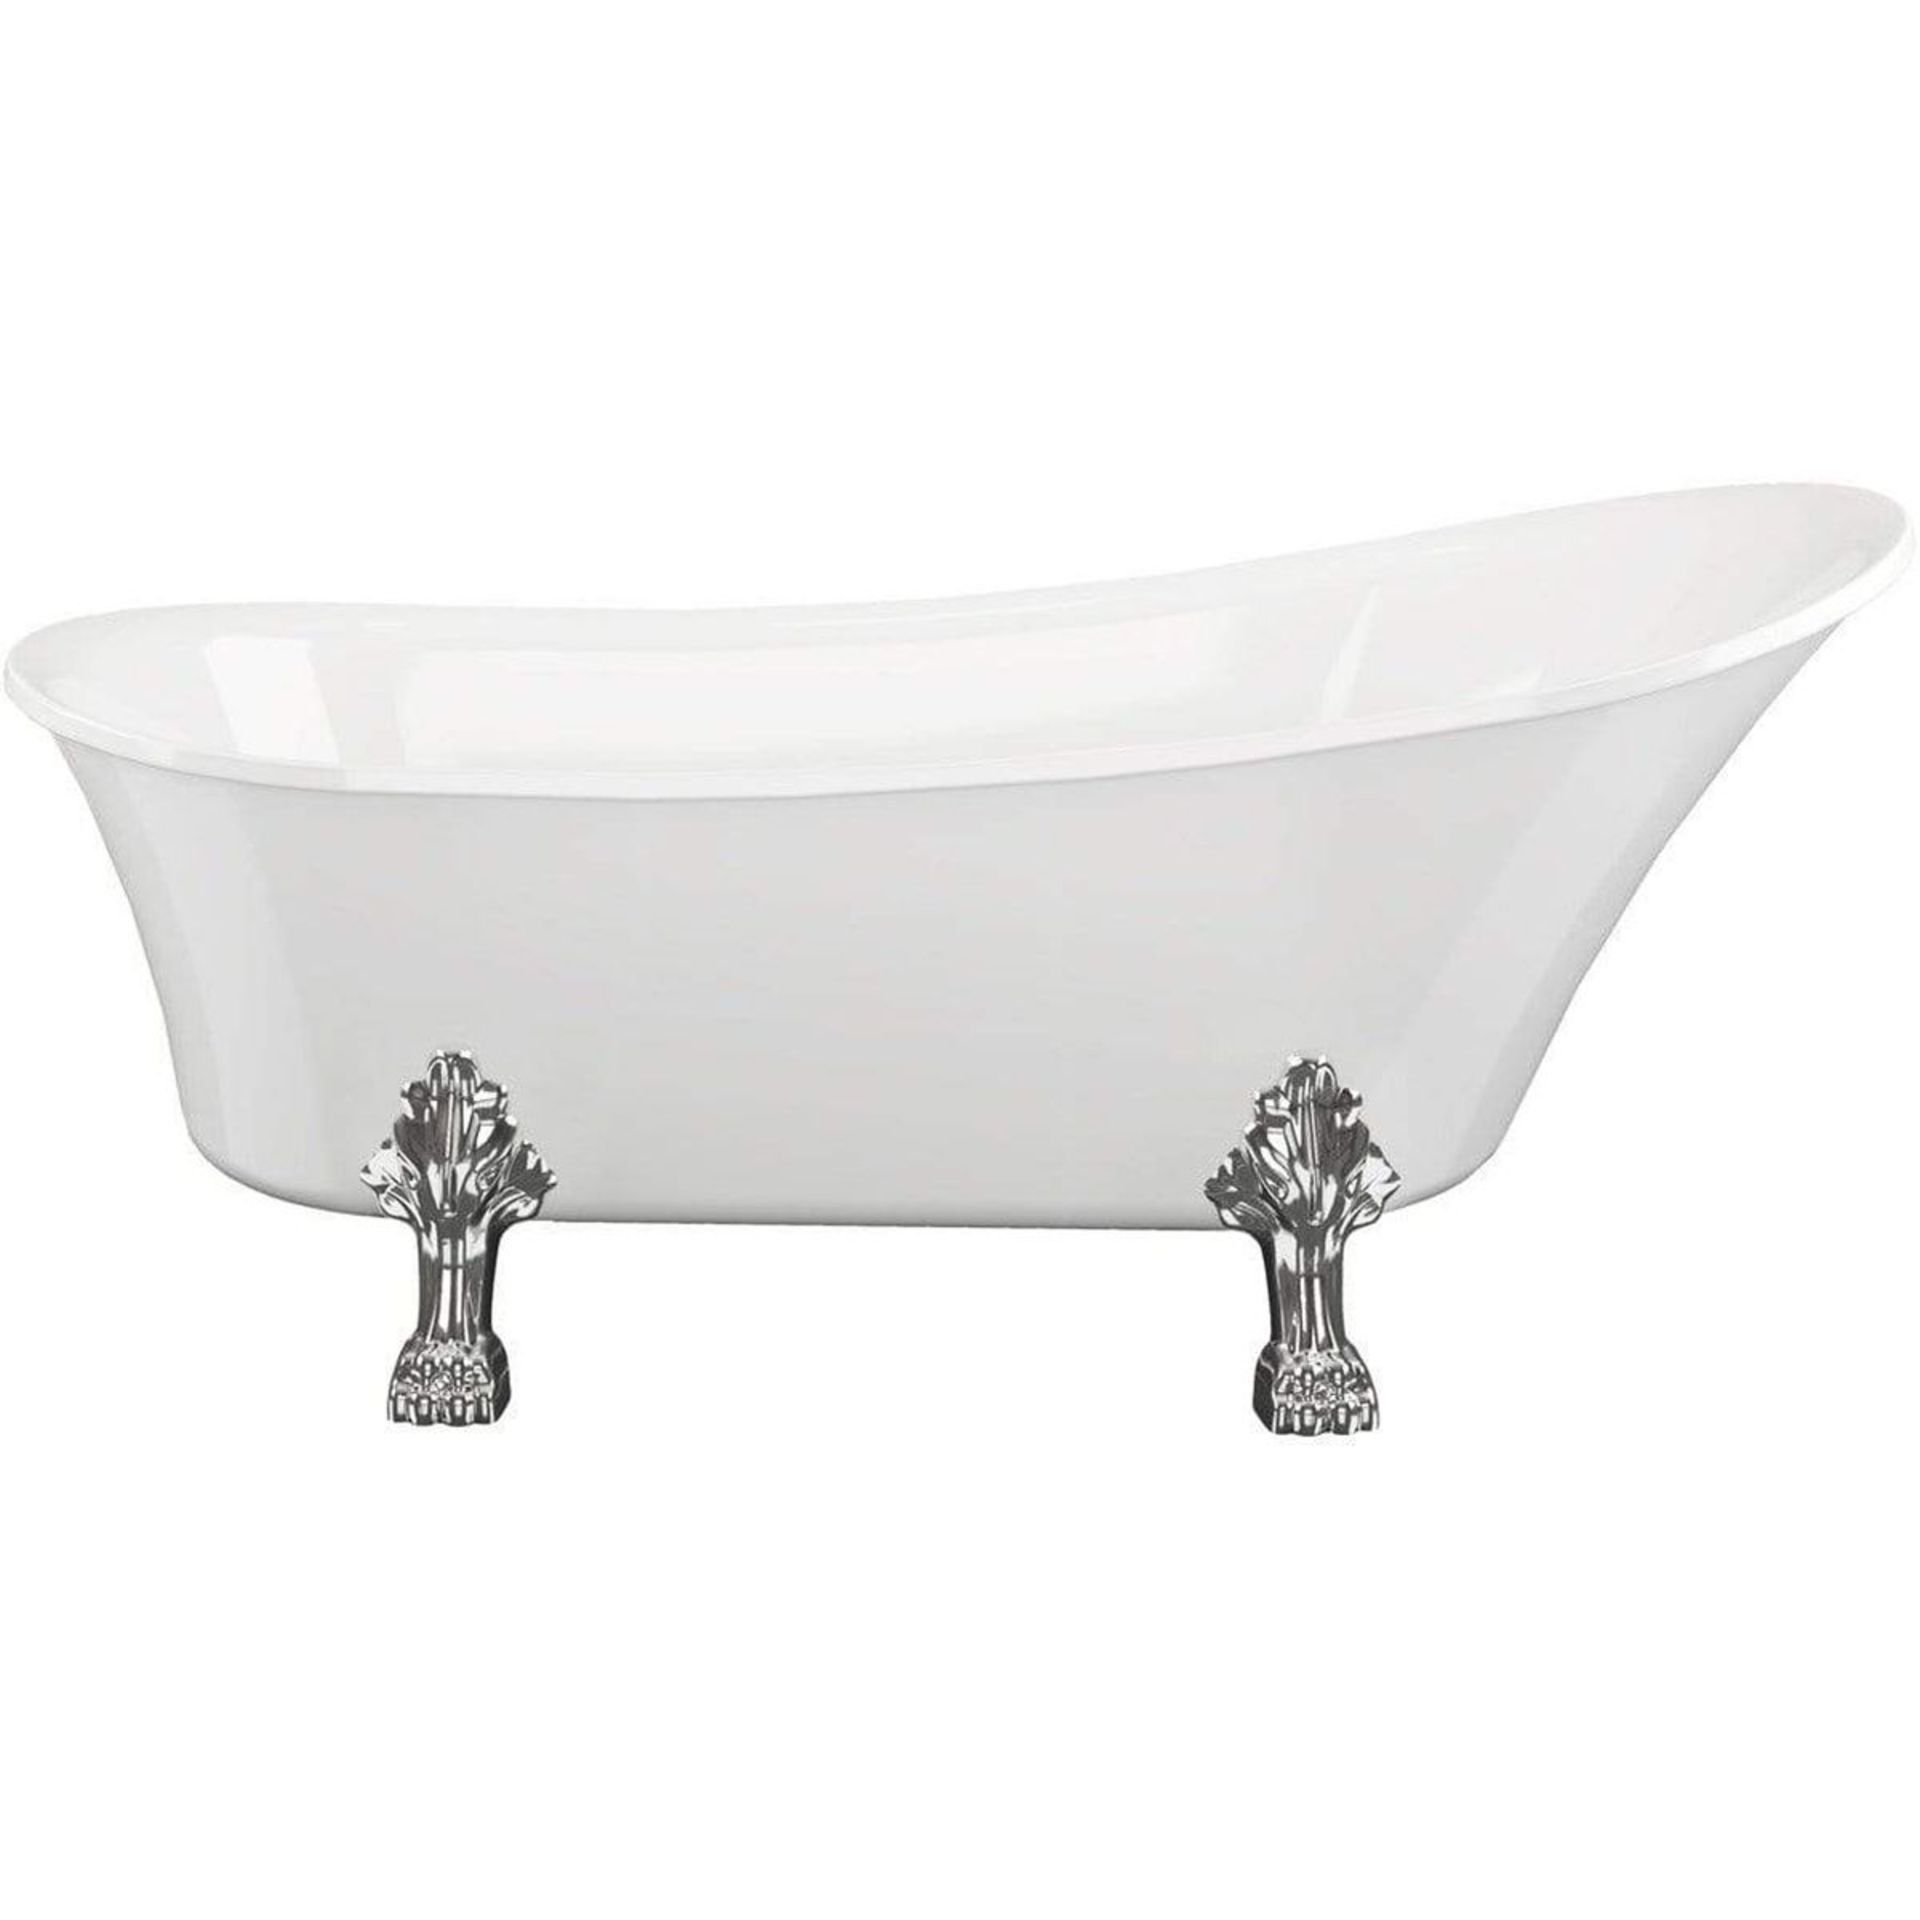 New (G4) 1700X700mm Traditional Slim Roll Top Slipper Bath - Chrome Feet. RRP £999.99.Bath Ma... - Image 2 of 2